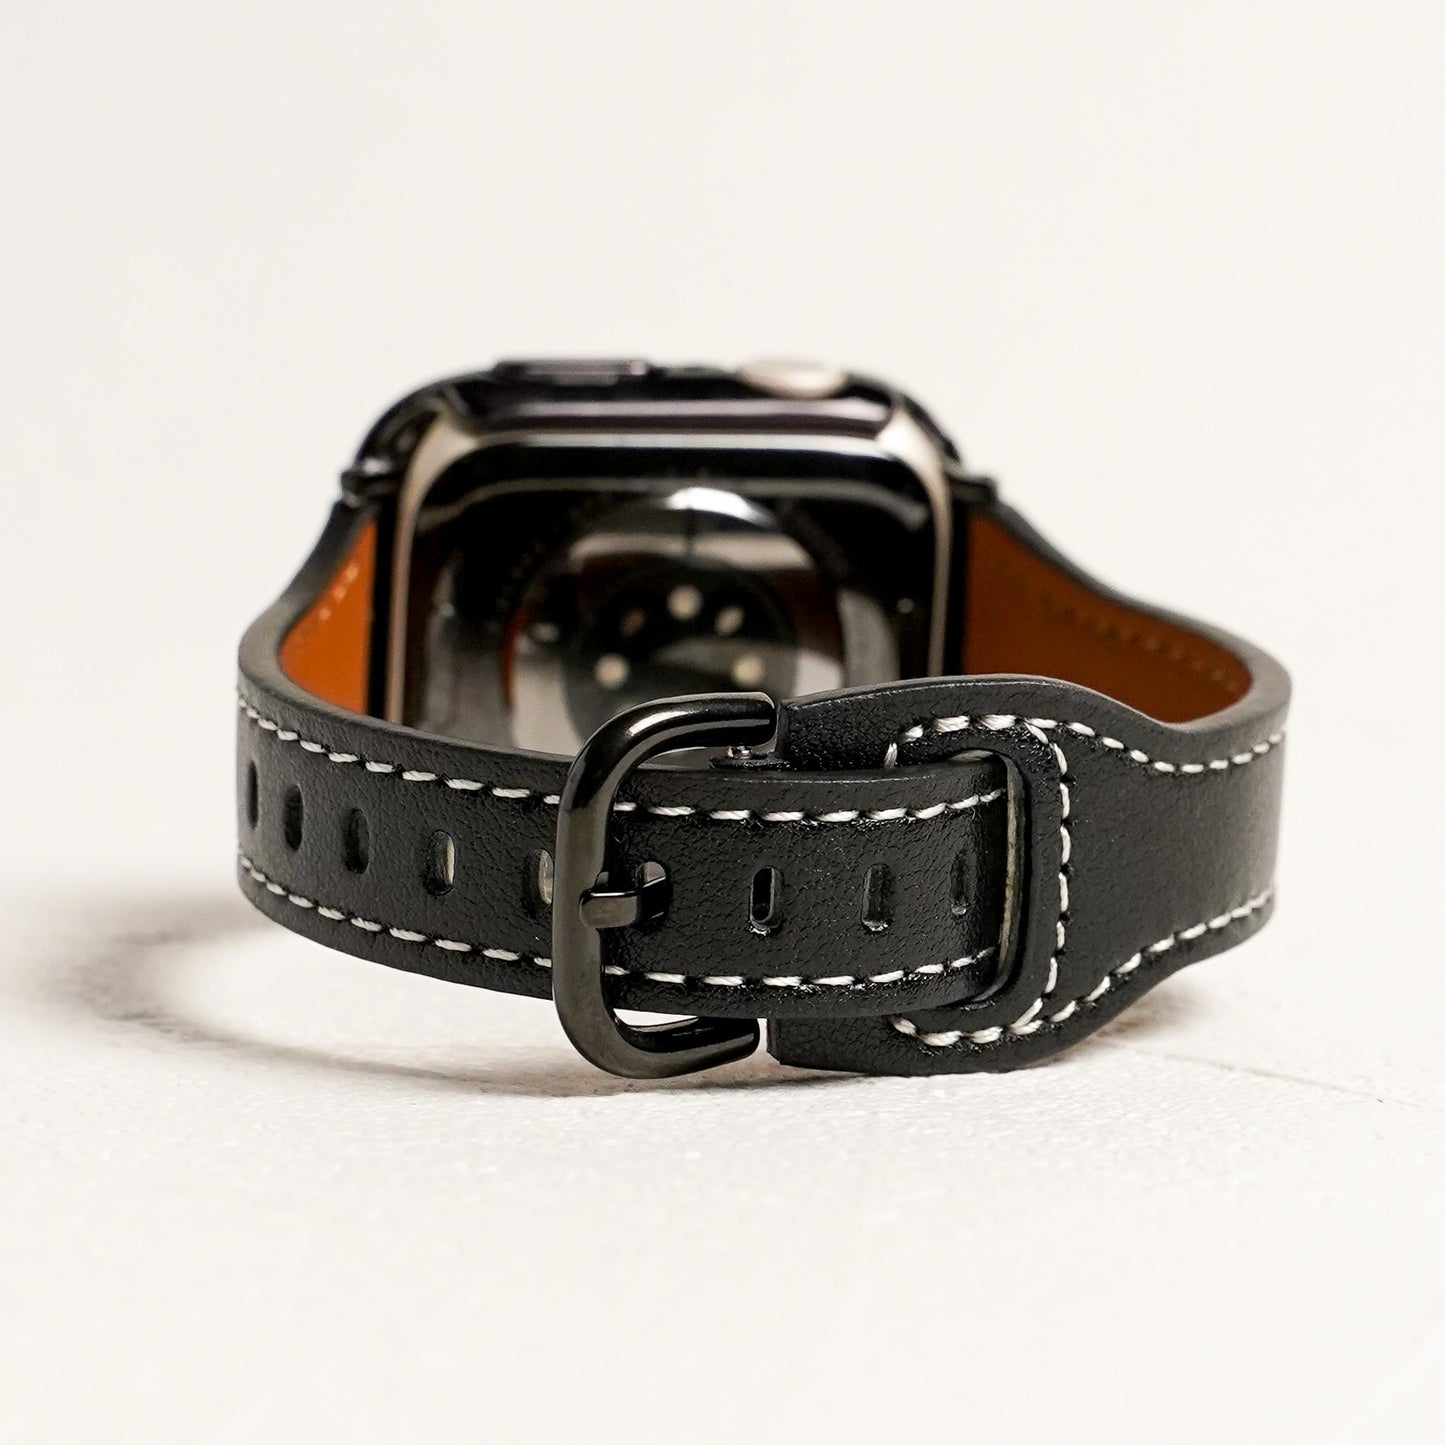 Smart Leather Slim Apple Watch Band Apple Watch